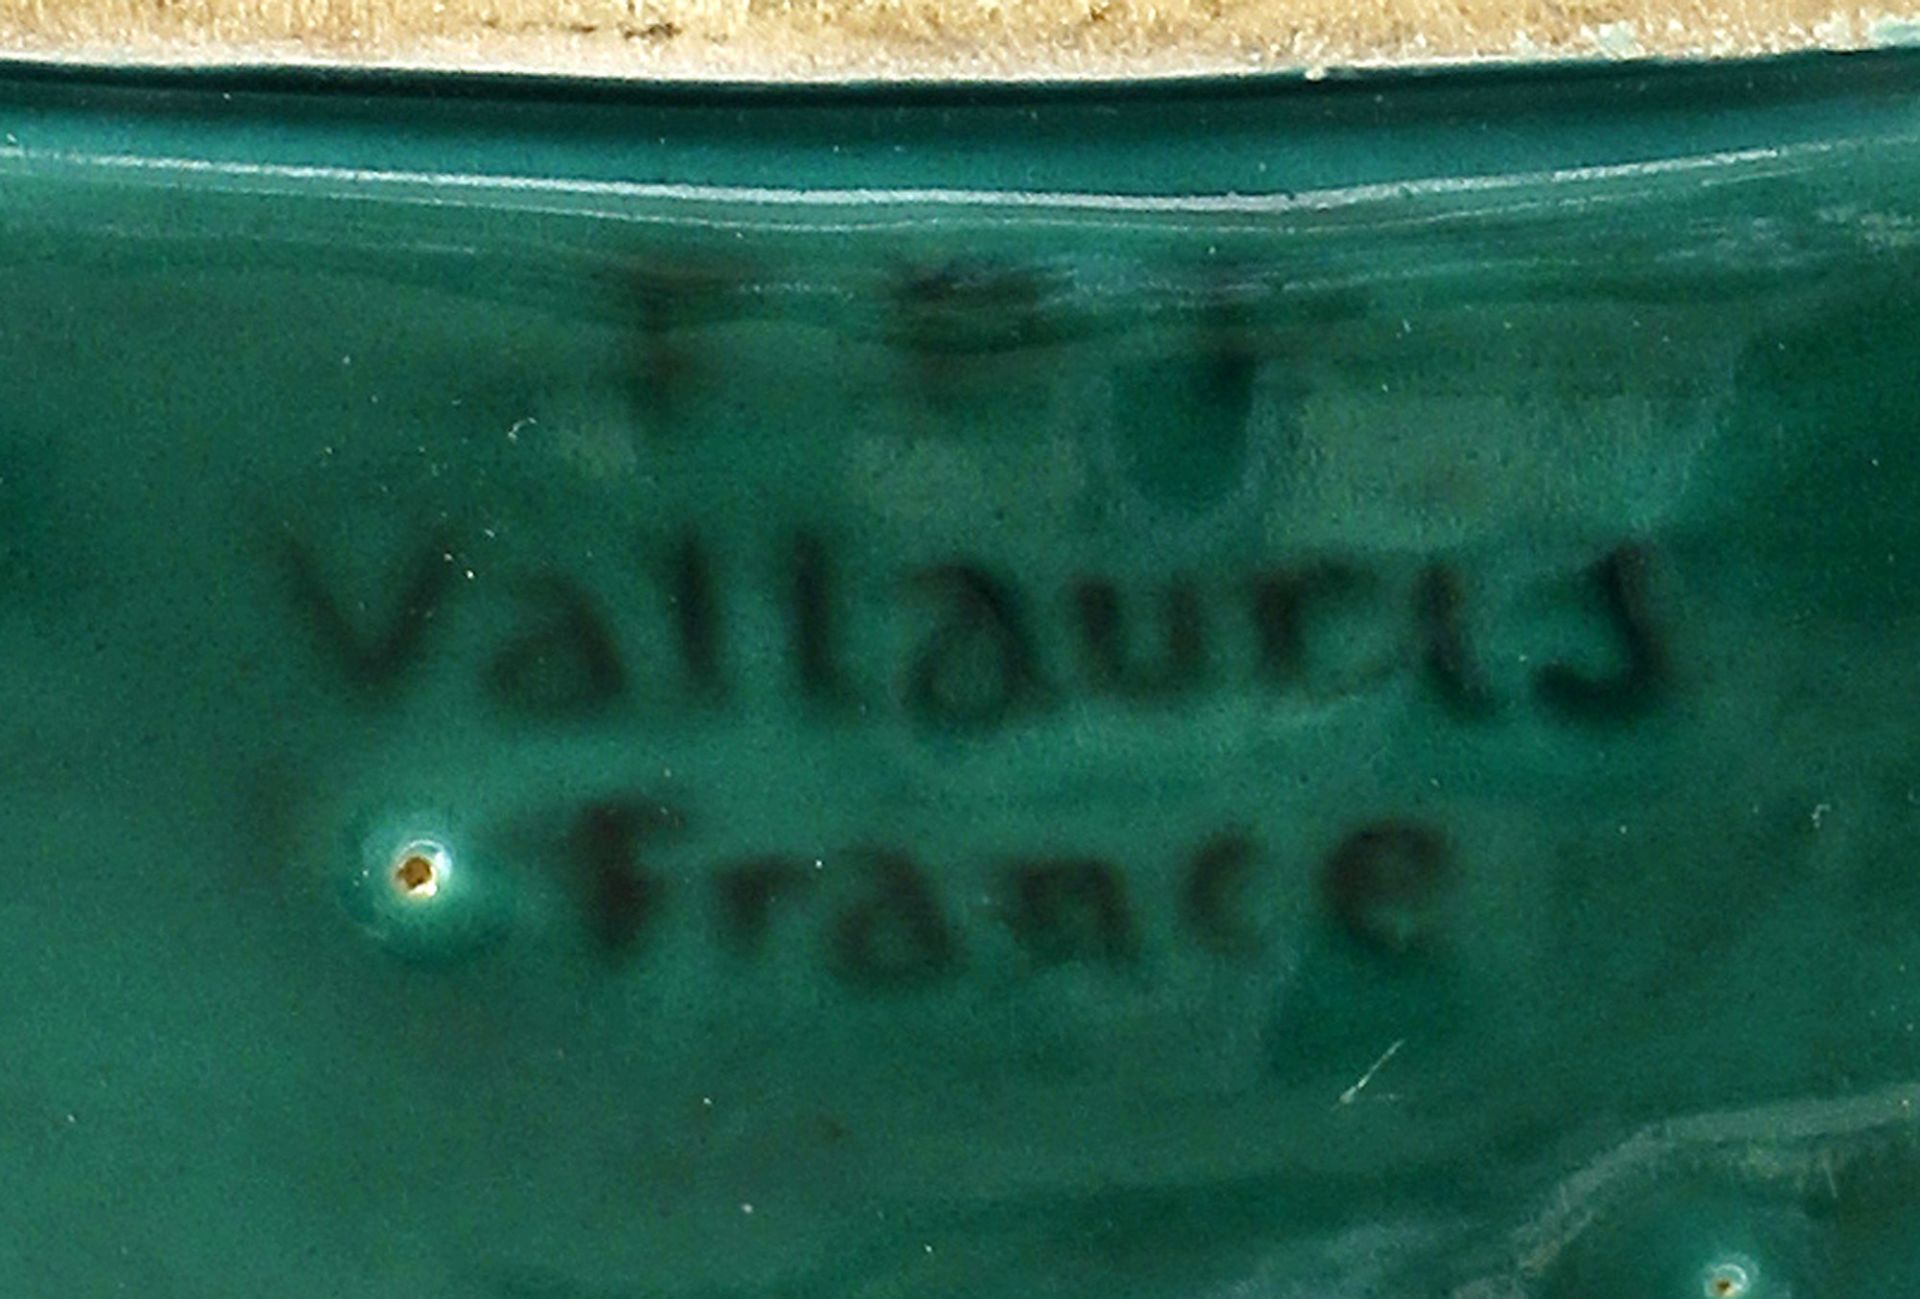 Platte Vallauris Frankreich - Image 2 of 2